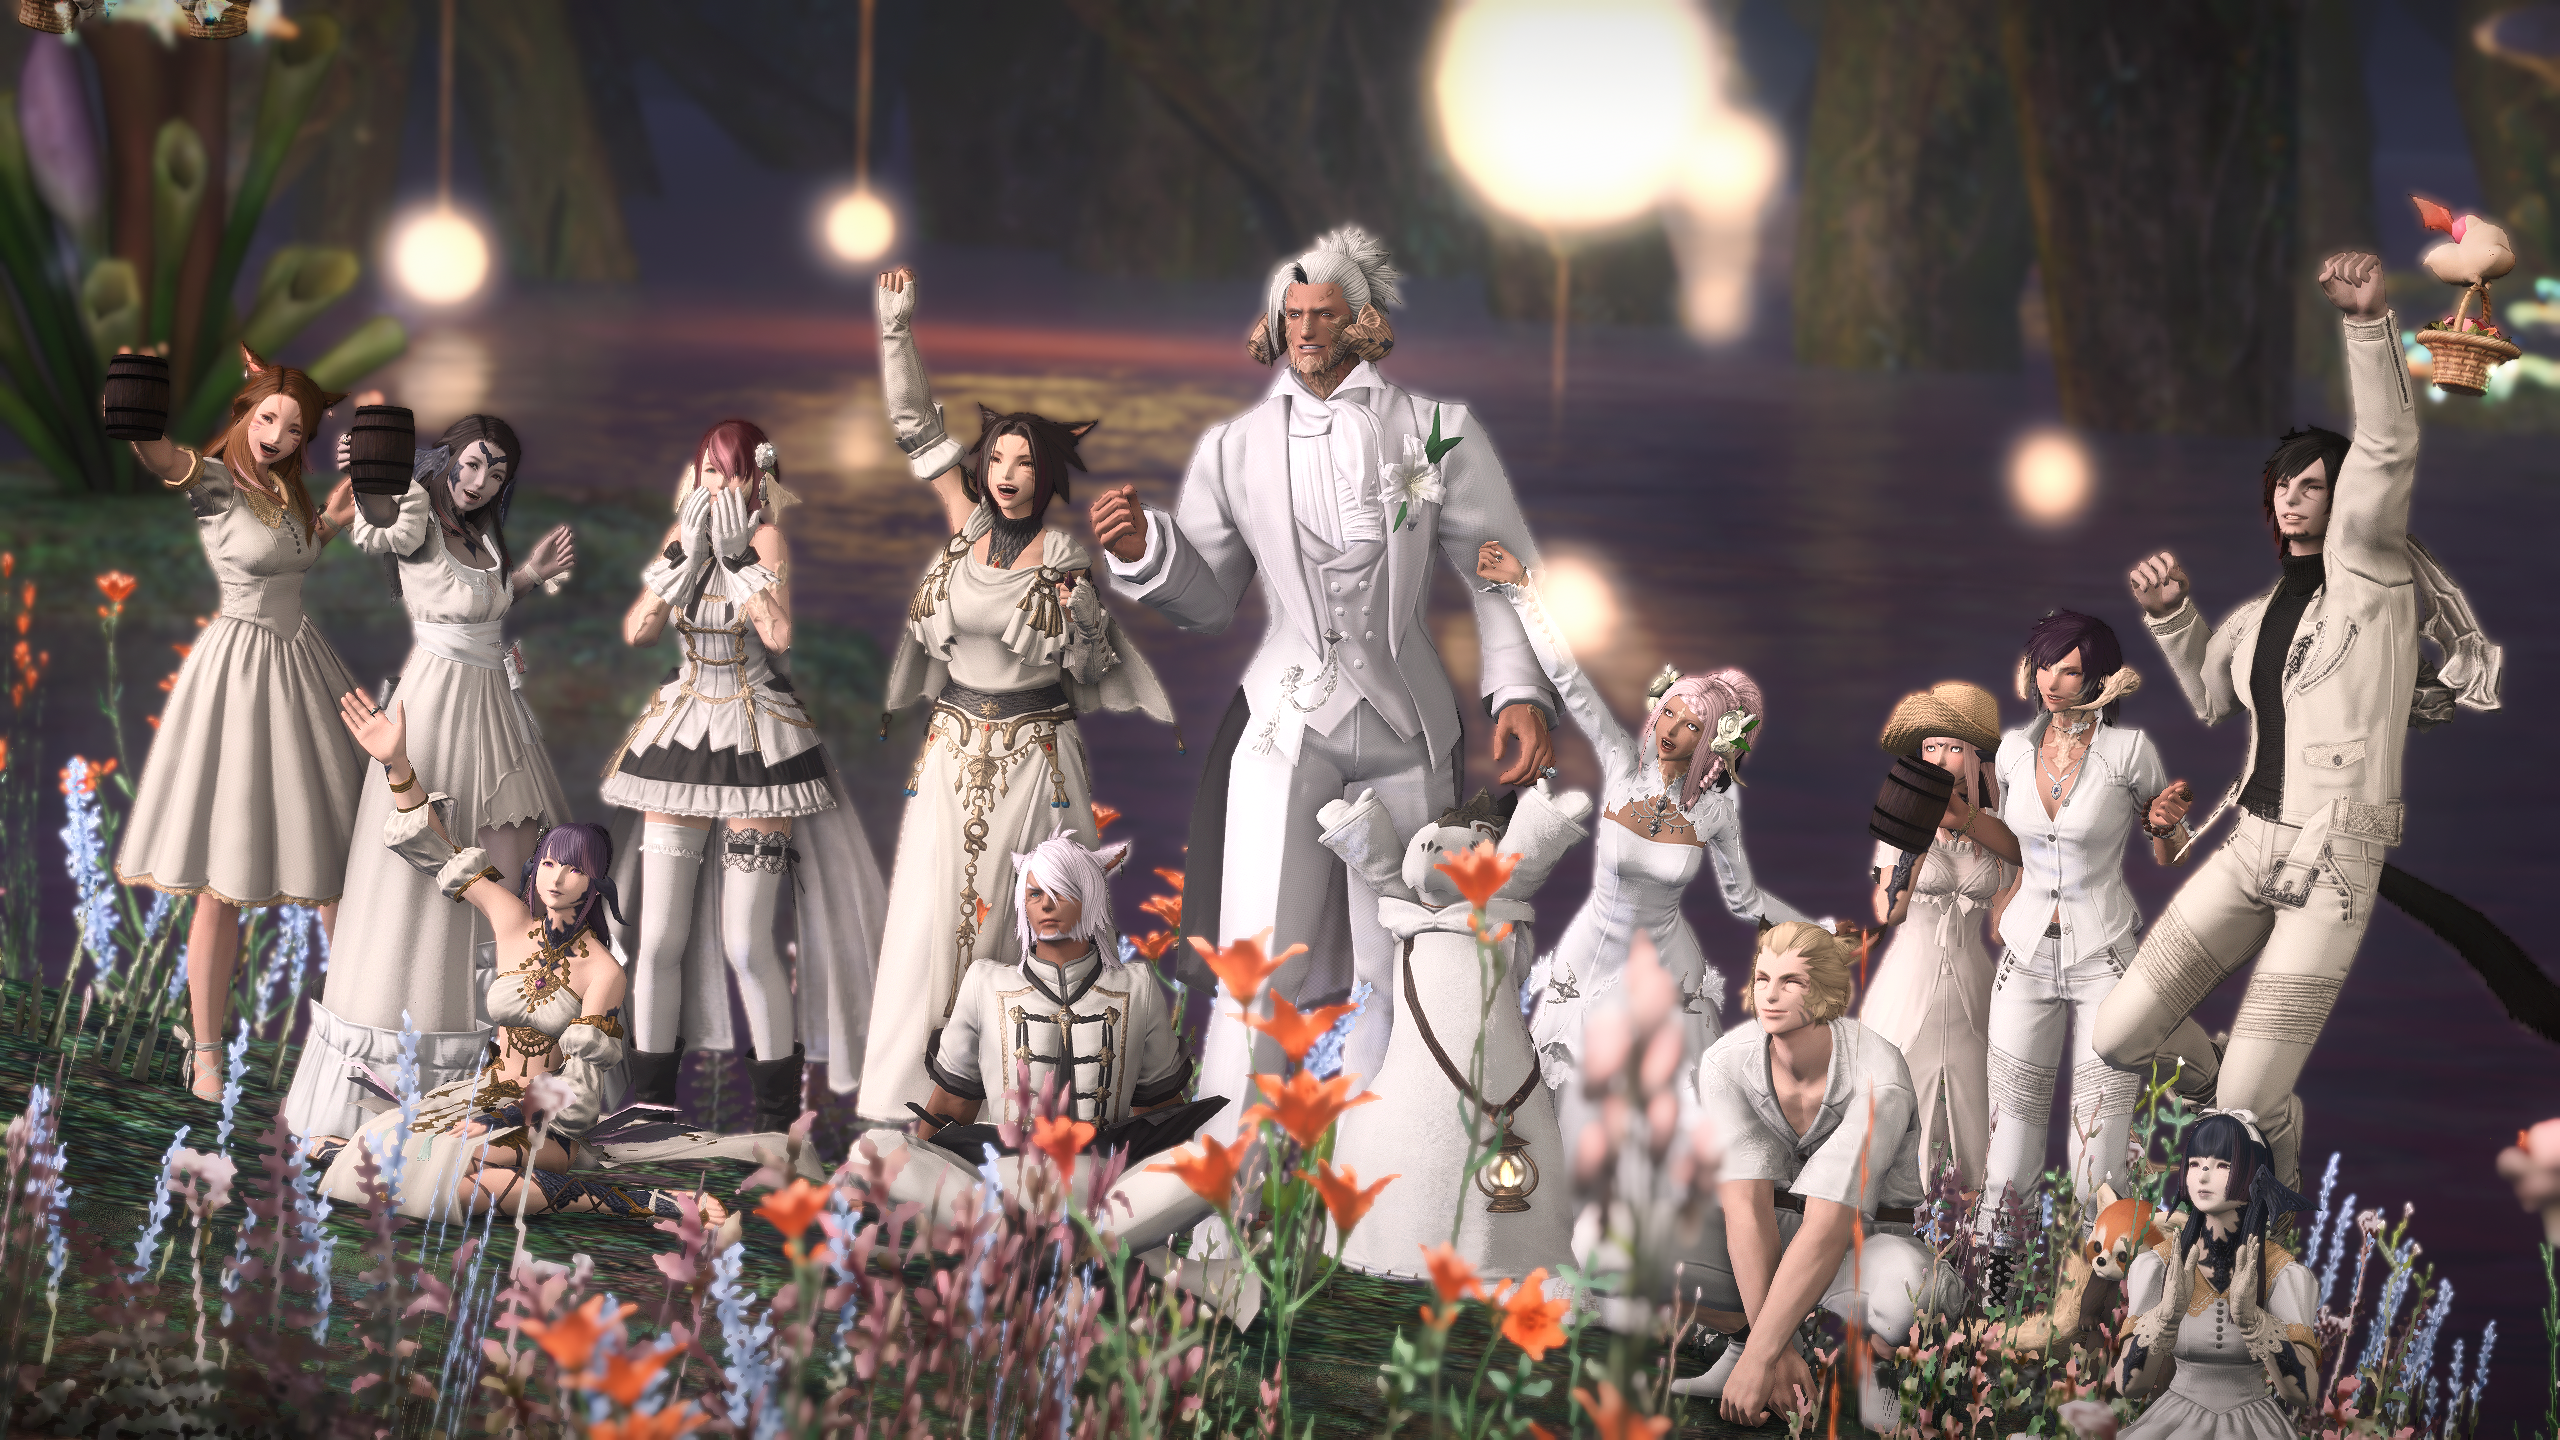 General 2560x1440 Final Fantasy XIV: A Realm Reborn reshade weddings white oNyx CGI video game characters wedding dress wedding attire flowers gloves video games